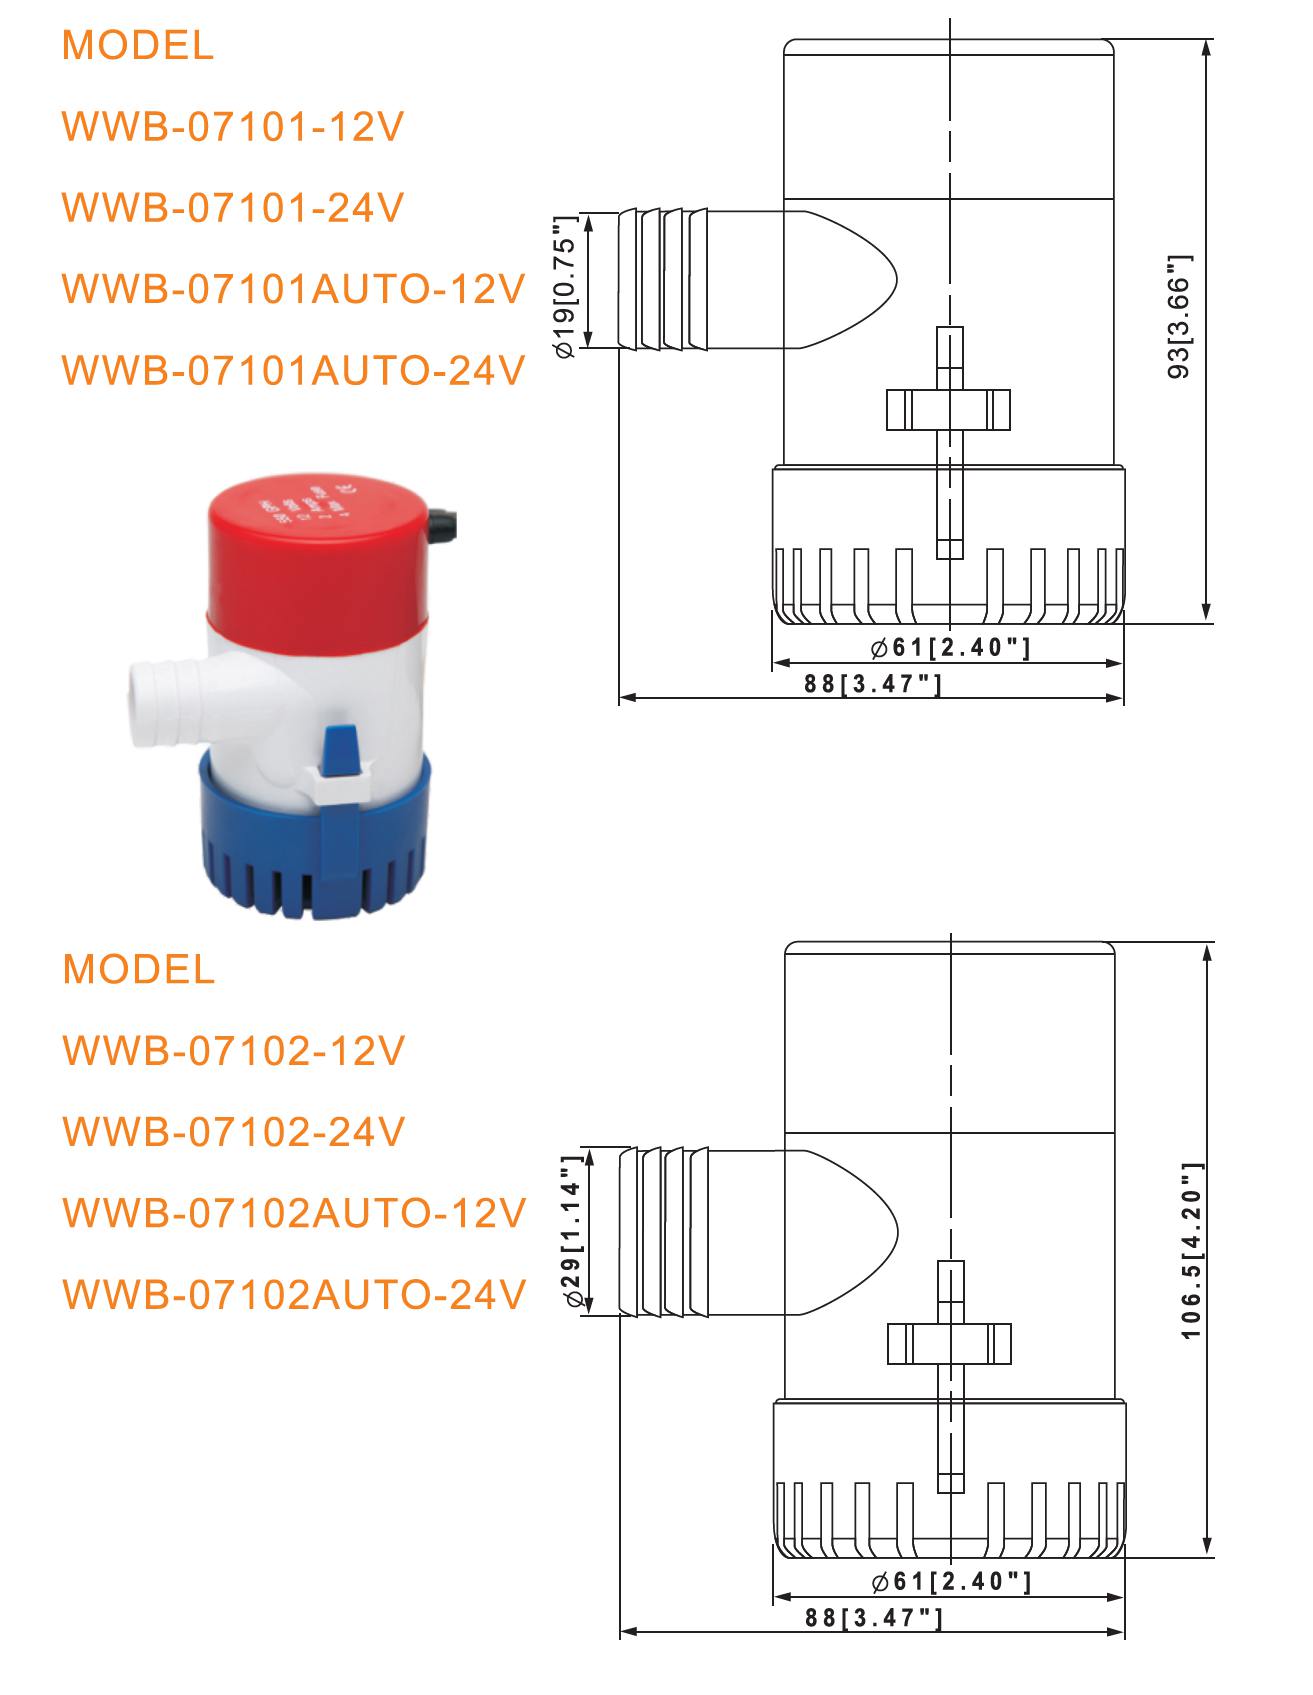 WWB-07101 Bilge Pump (Dc Pump)